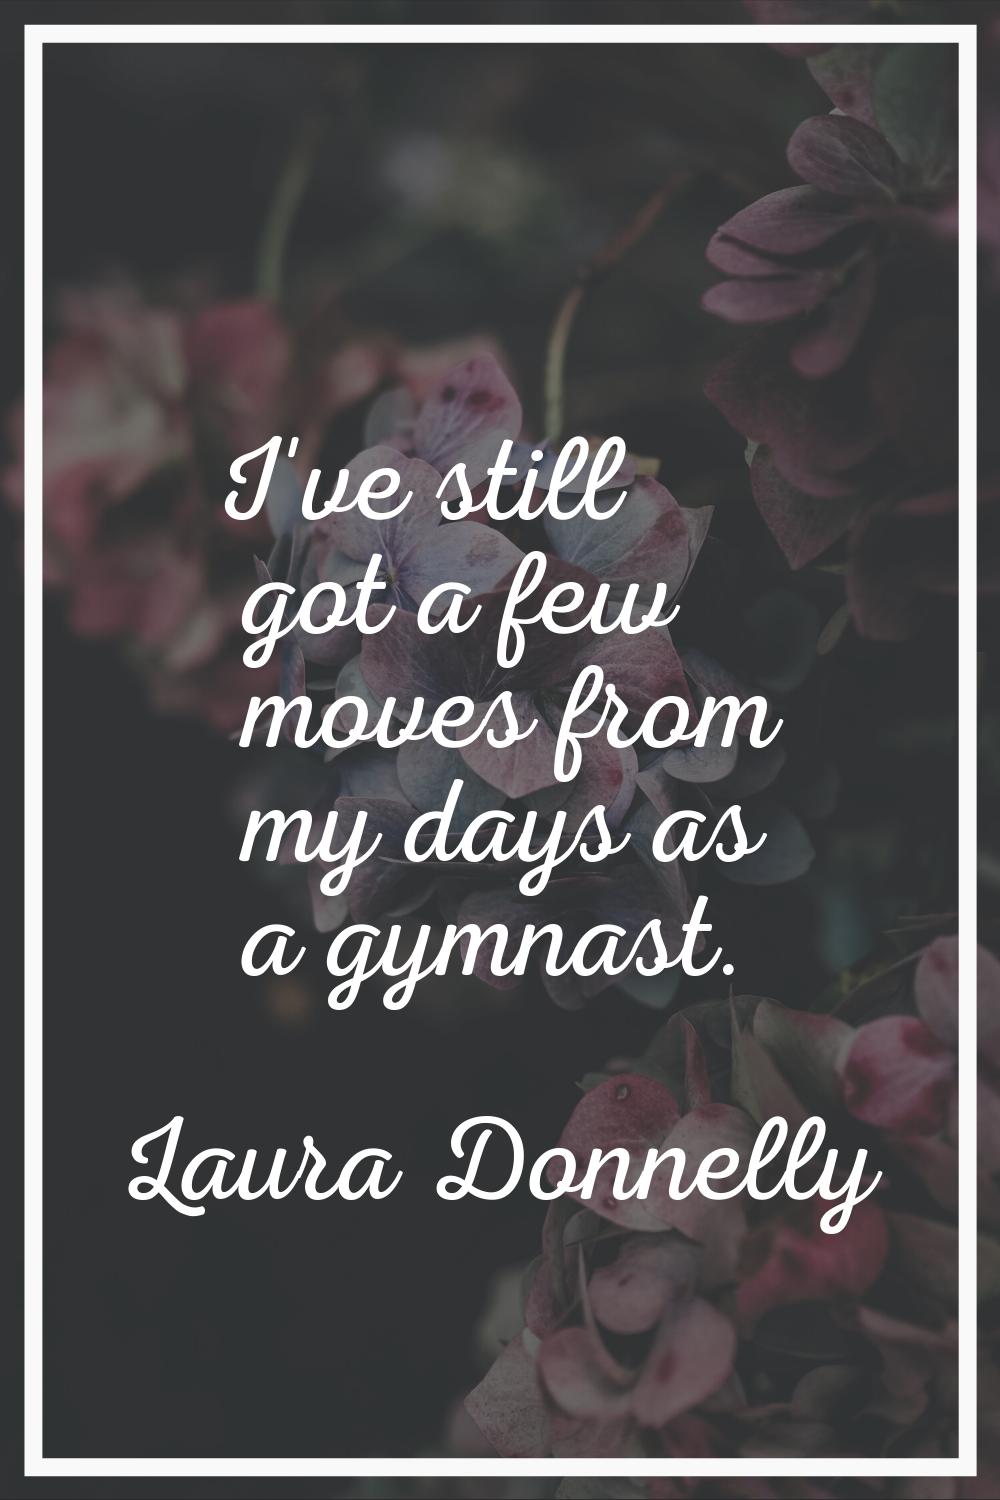 I've still got a few moves from my days as a gymnast.